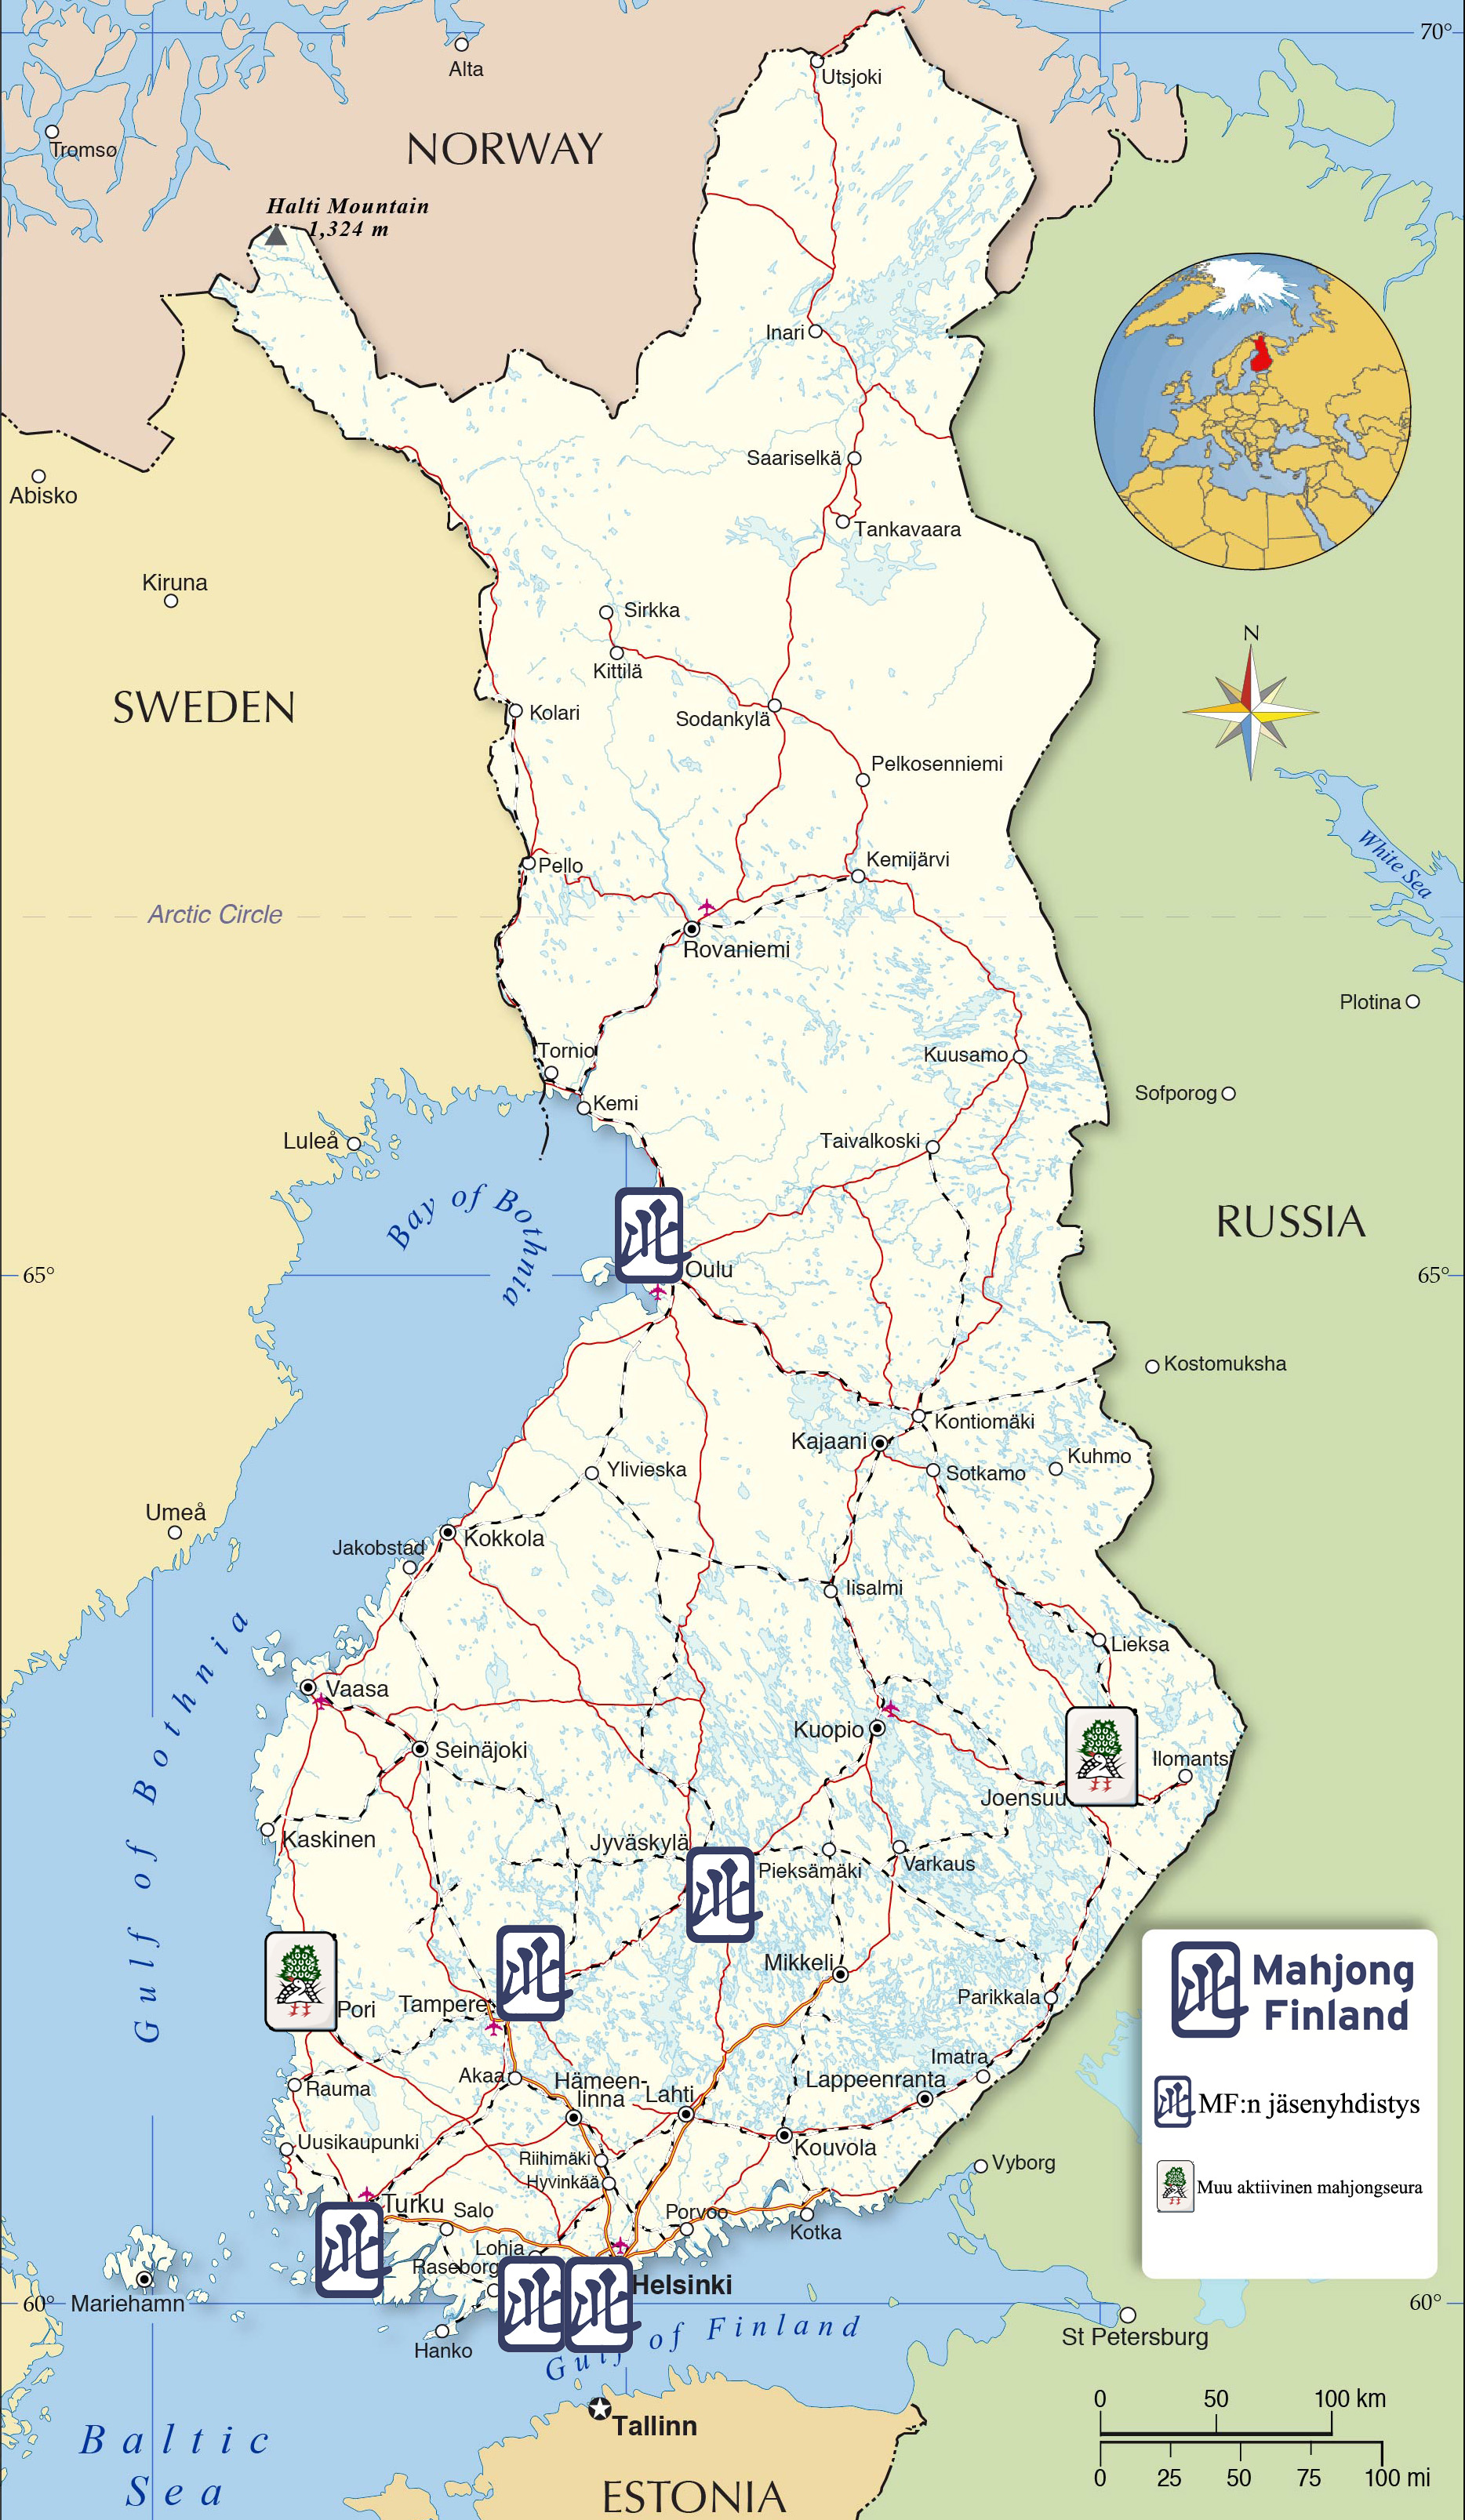 Mahjong Finland yhdistyskartta